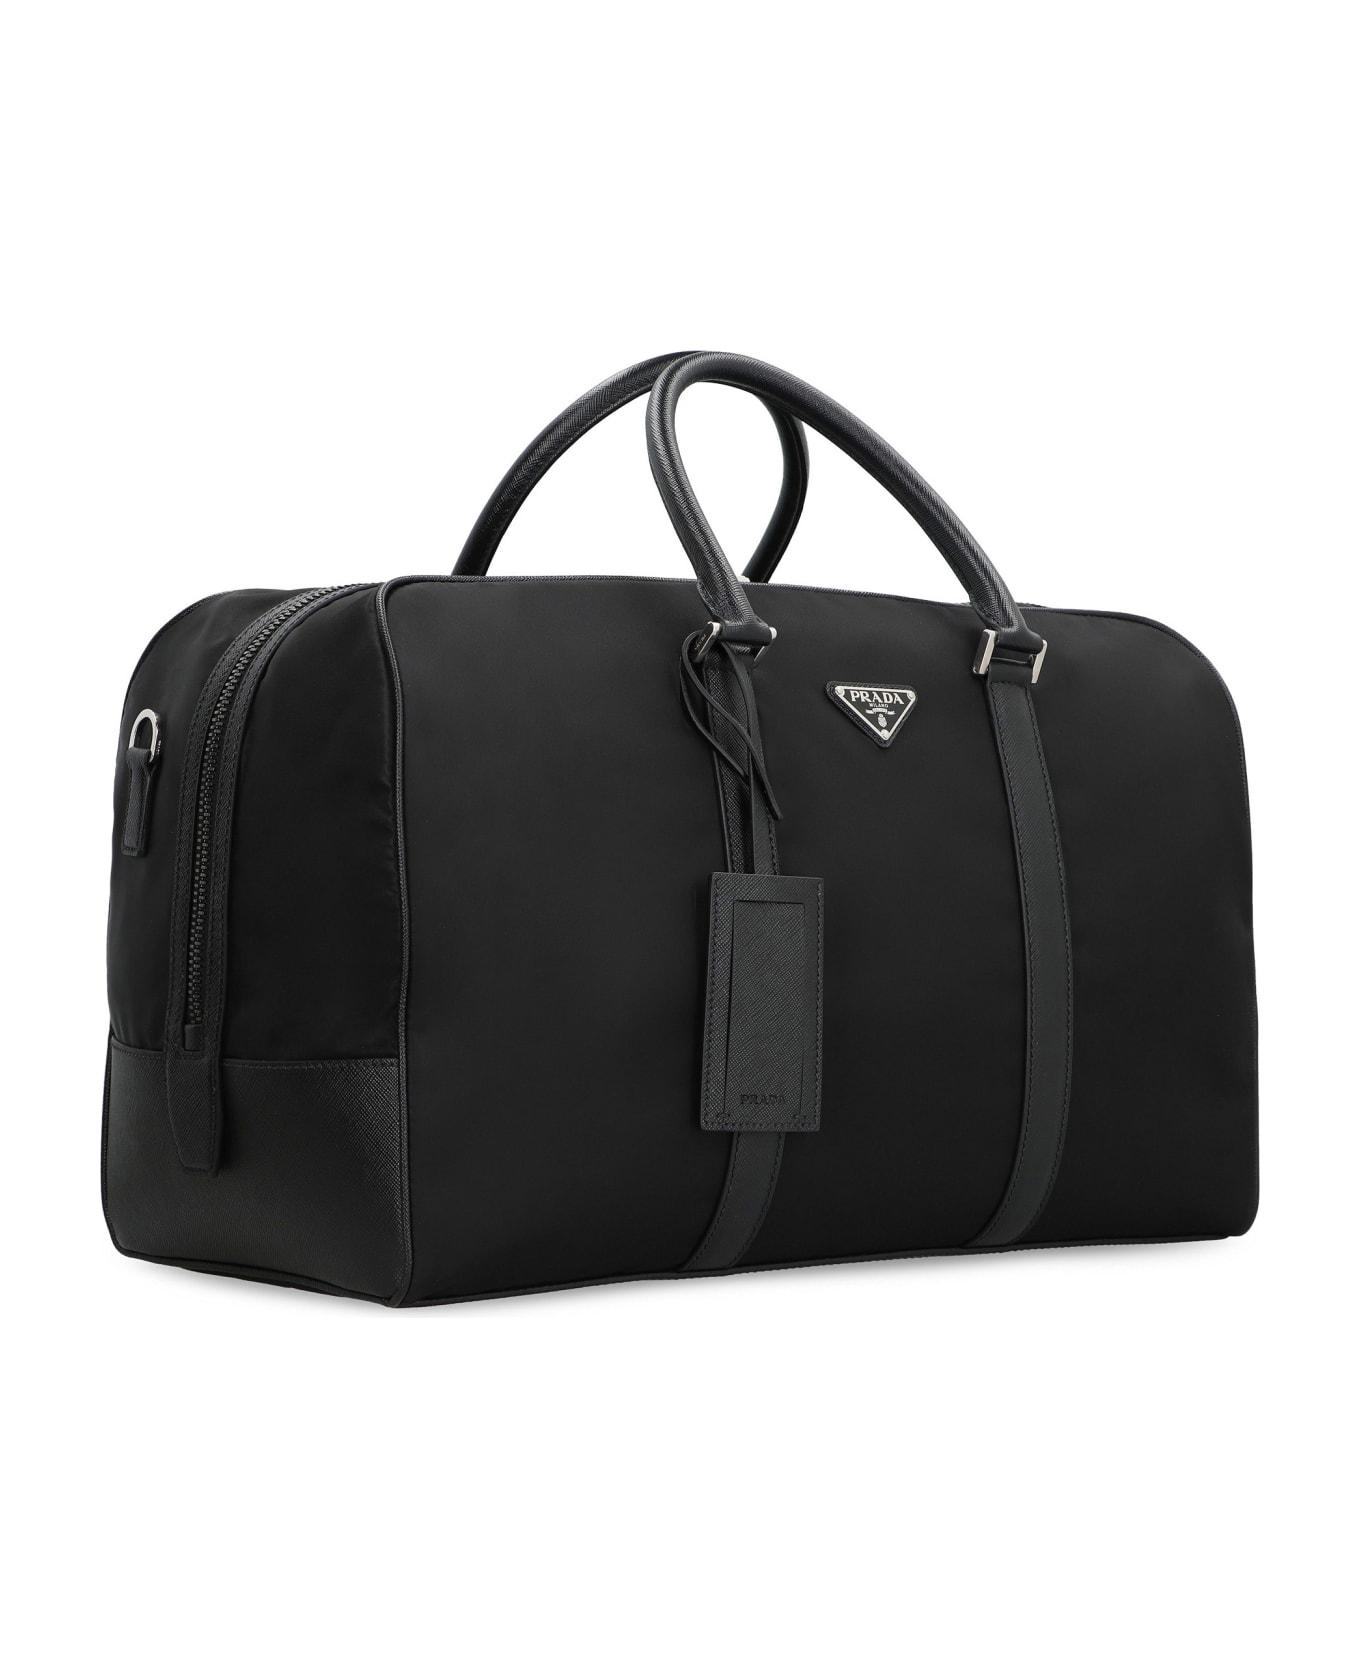 Prada Travel Bag - Black